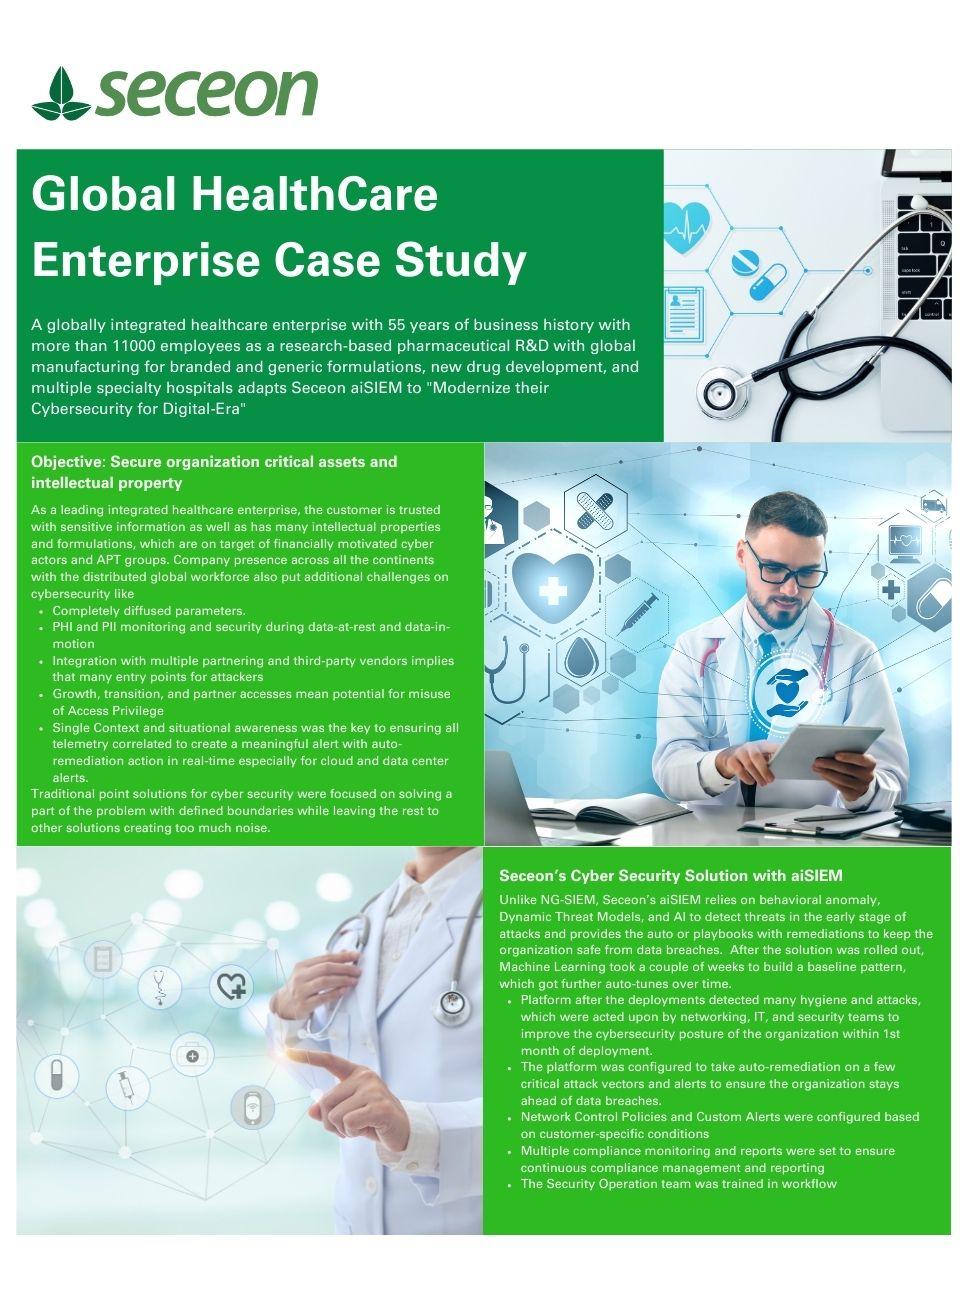 Global Healthcare Case Study